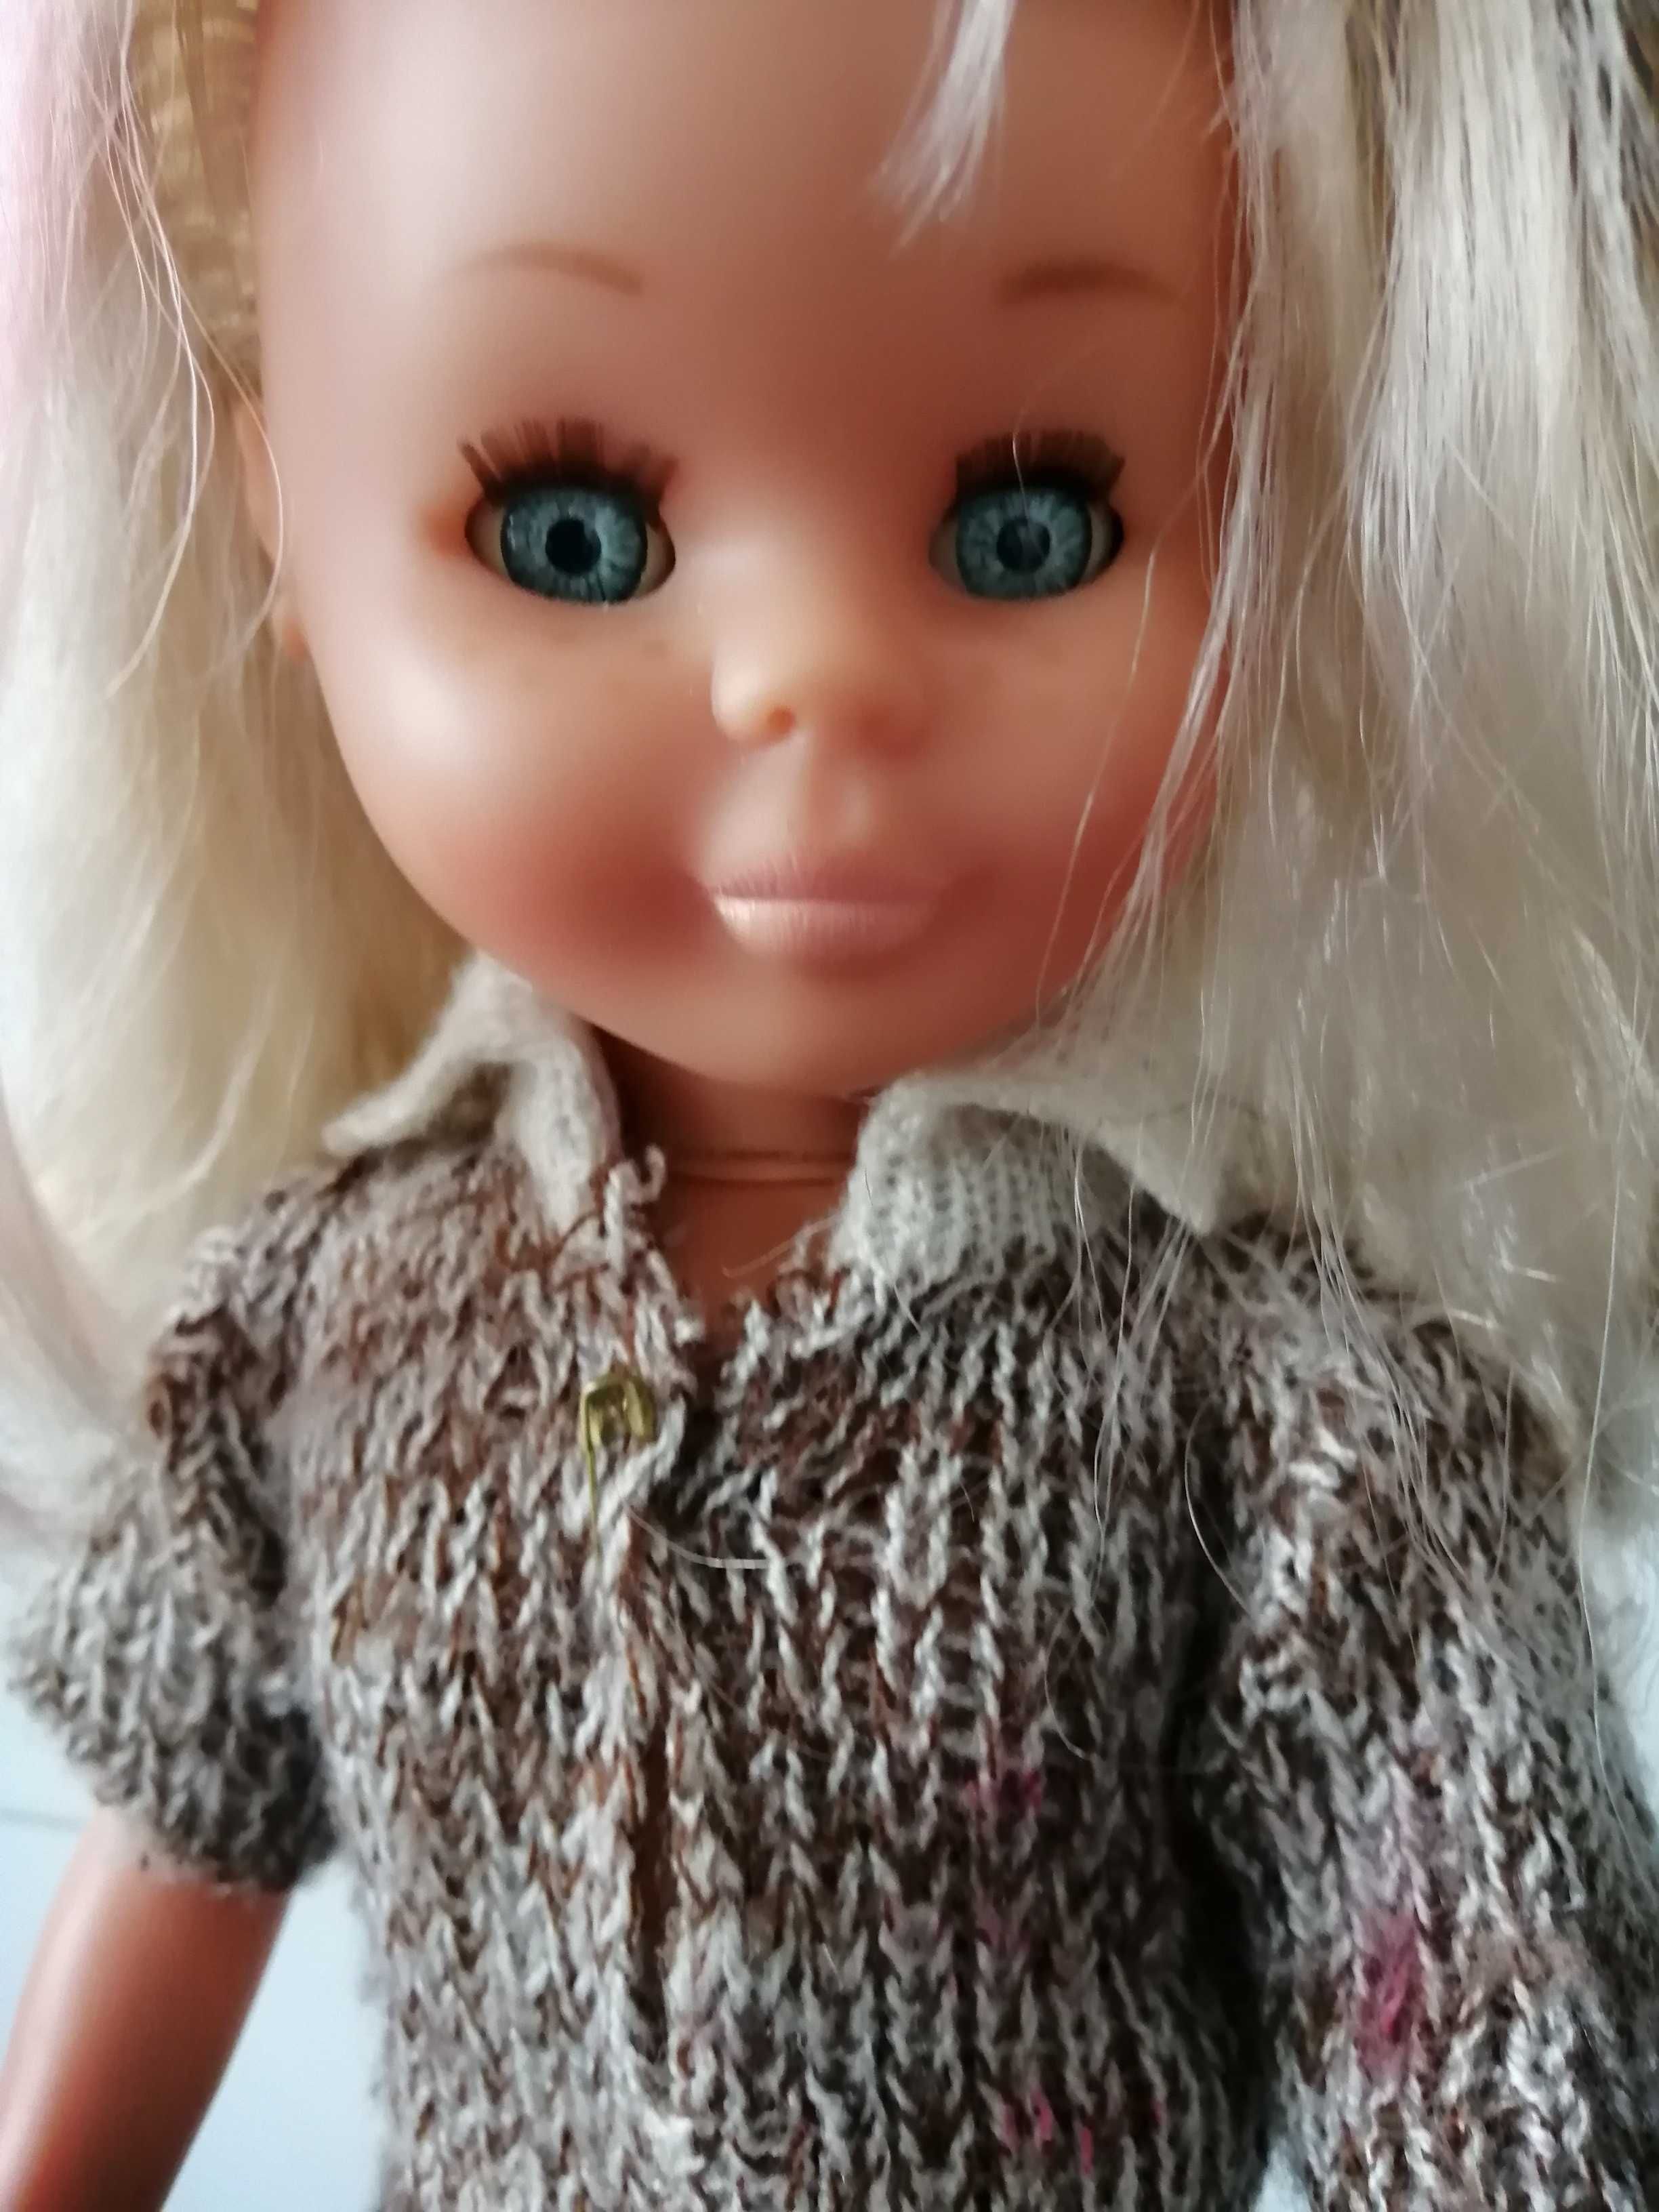 Nancy-famosa -Antiga boneca